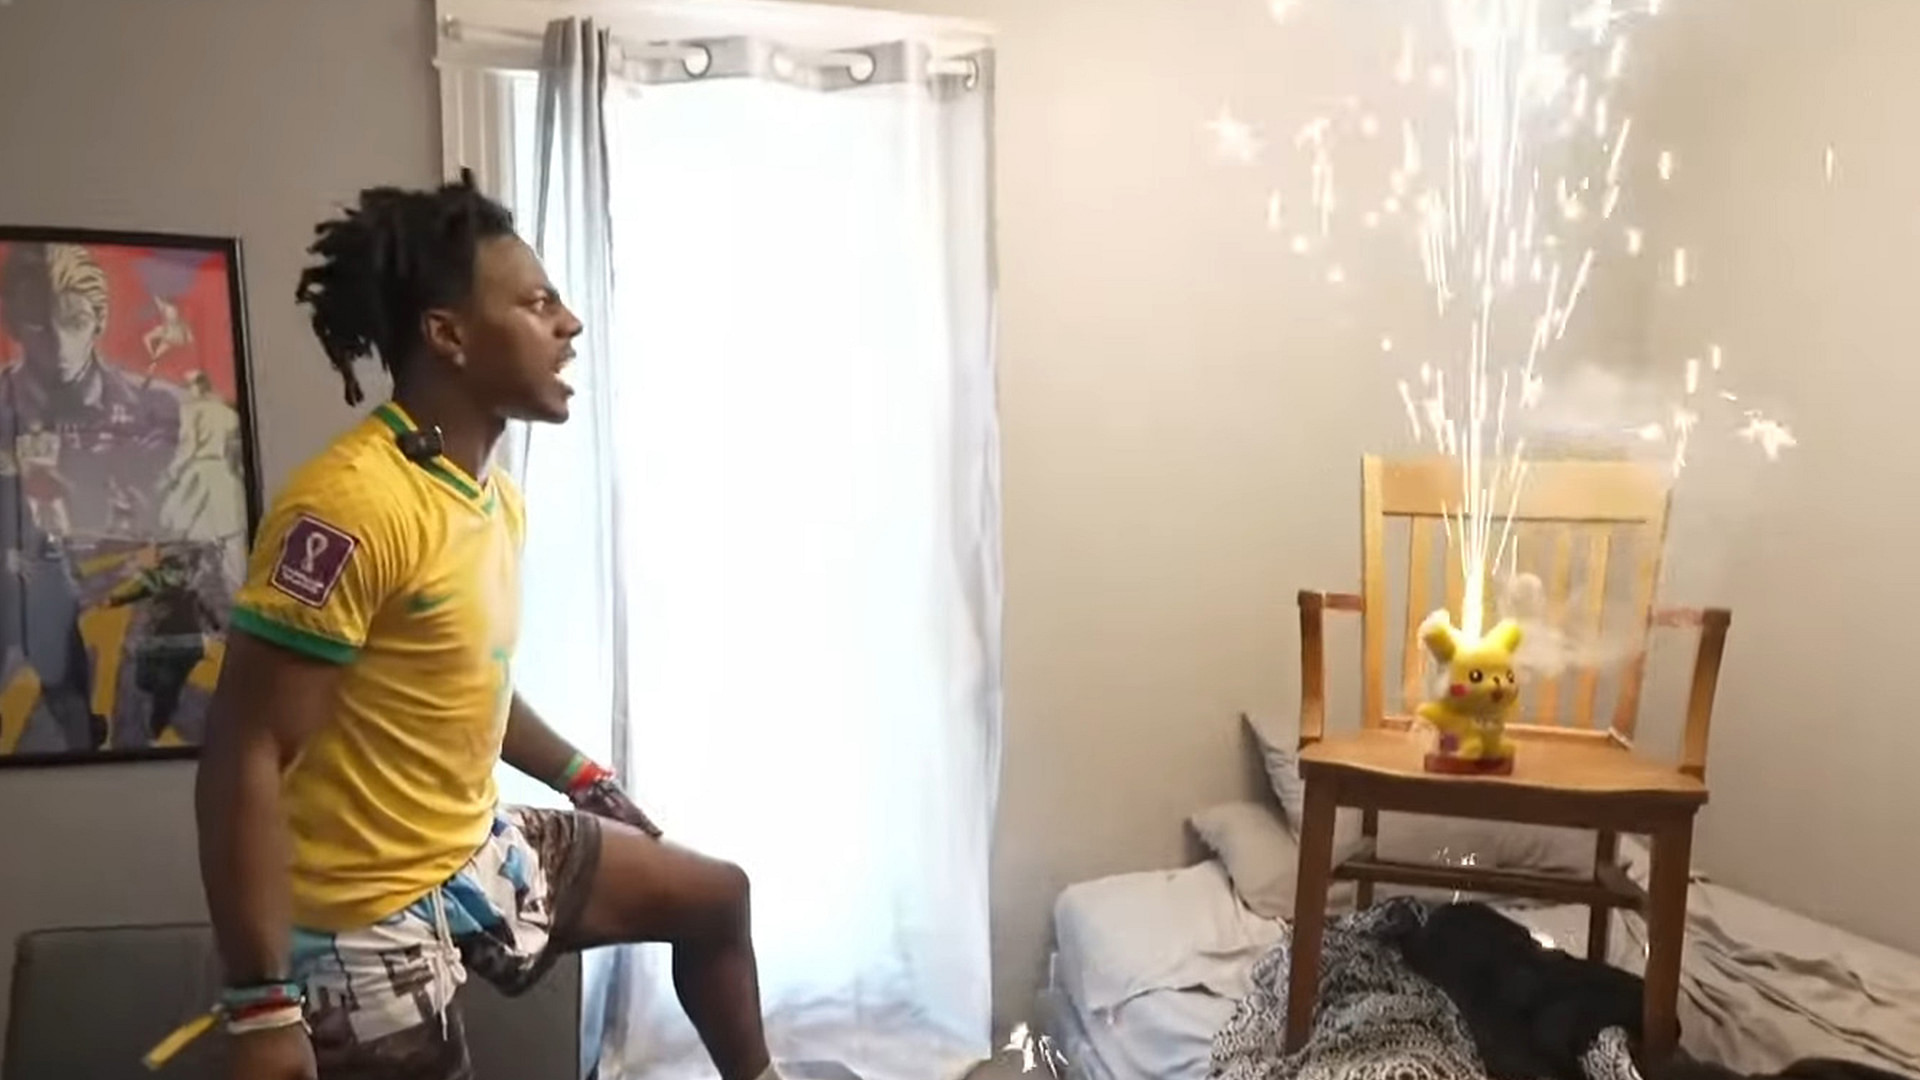 Is IShowSpeed safe? Twitter concerned after streamer's video shows him  lighting fireworks inside his room